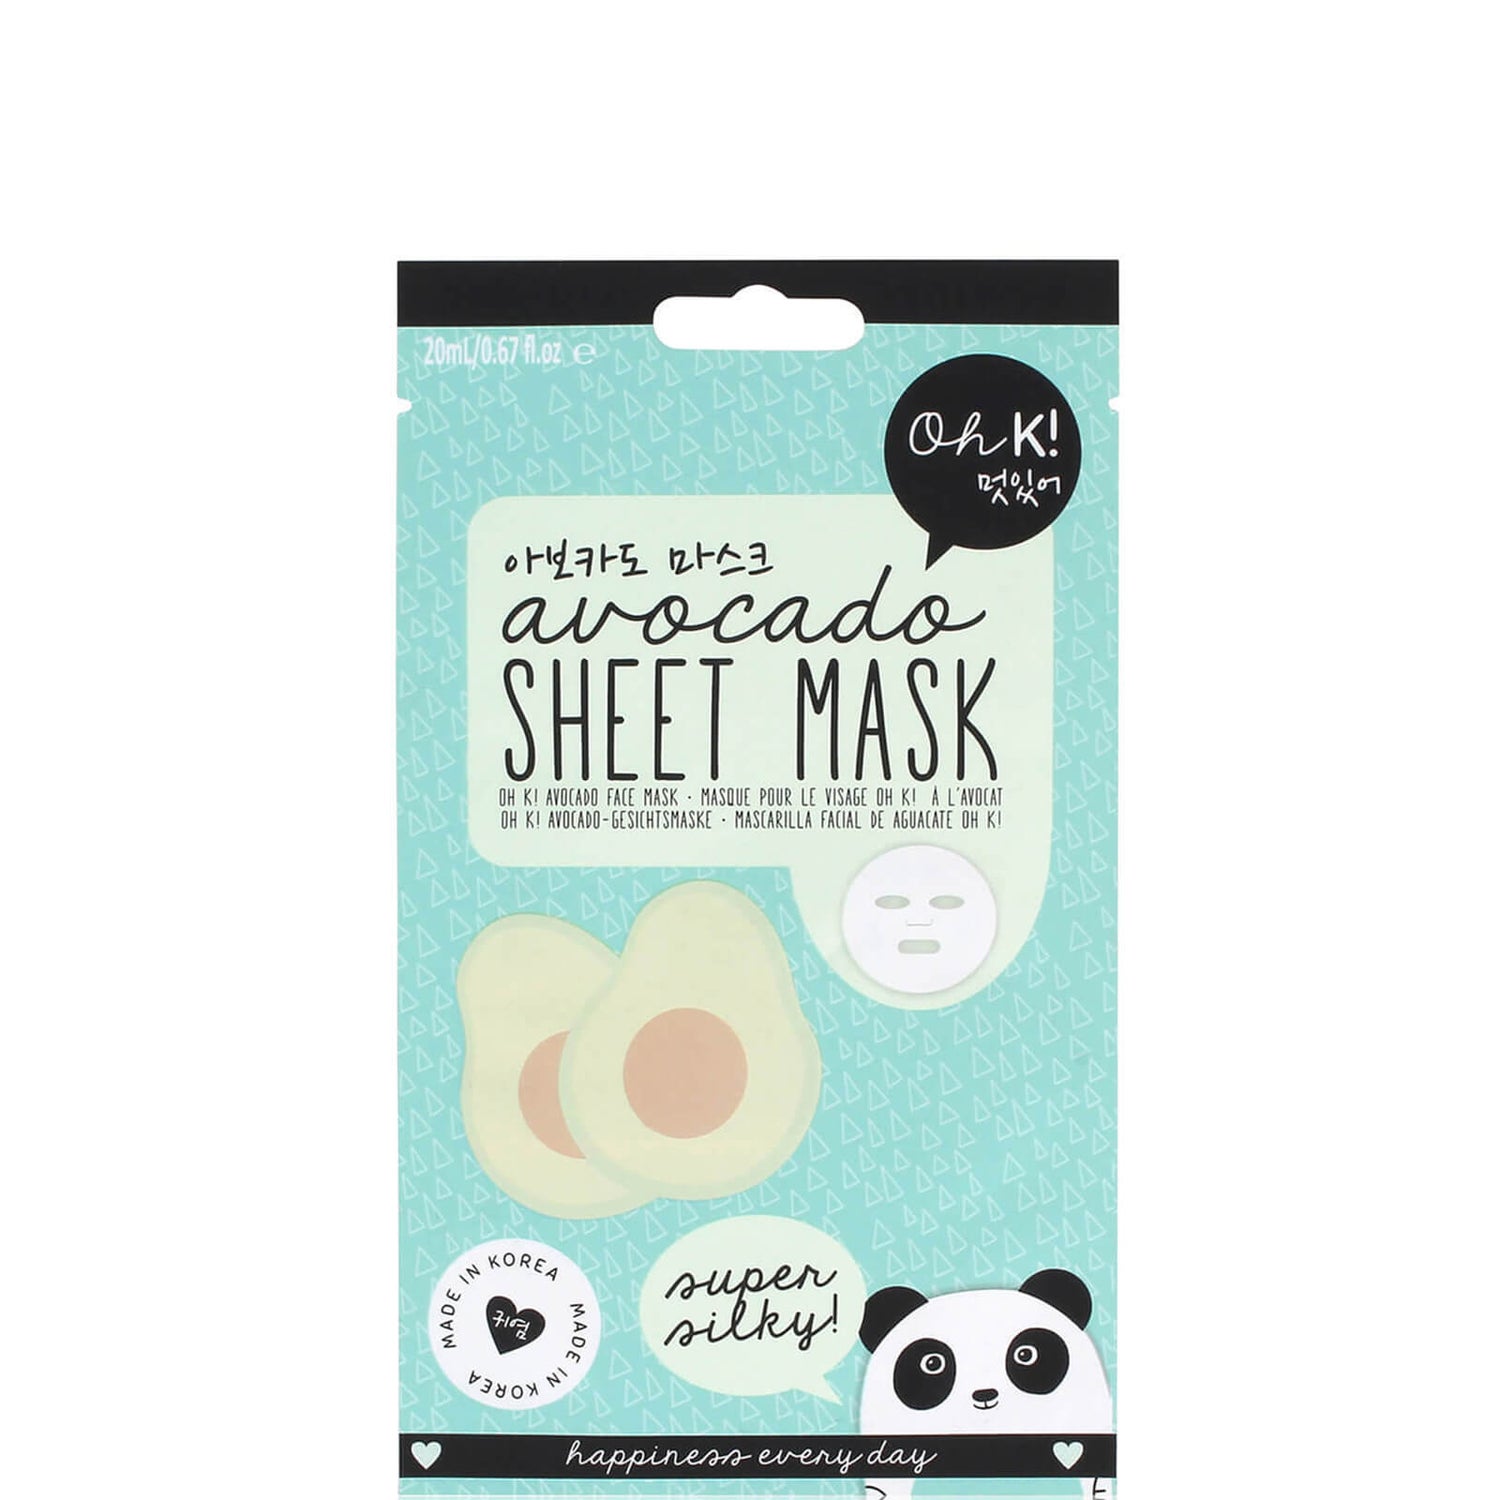 Oh K! Avocado Sheet Mask 23ml